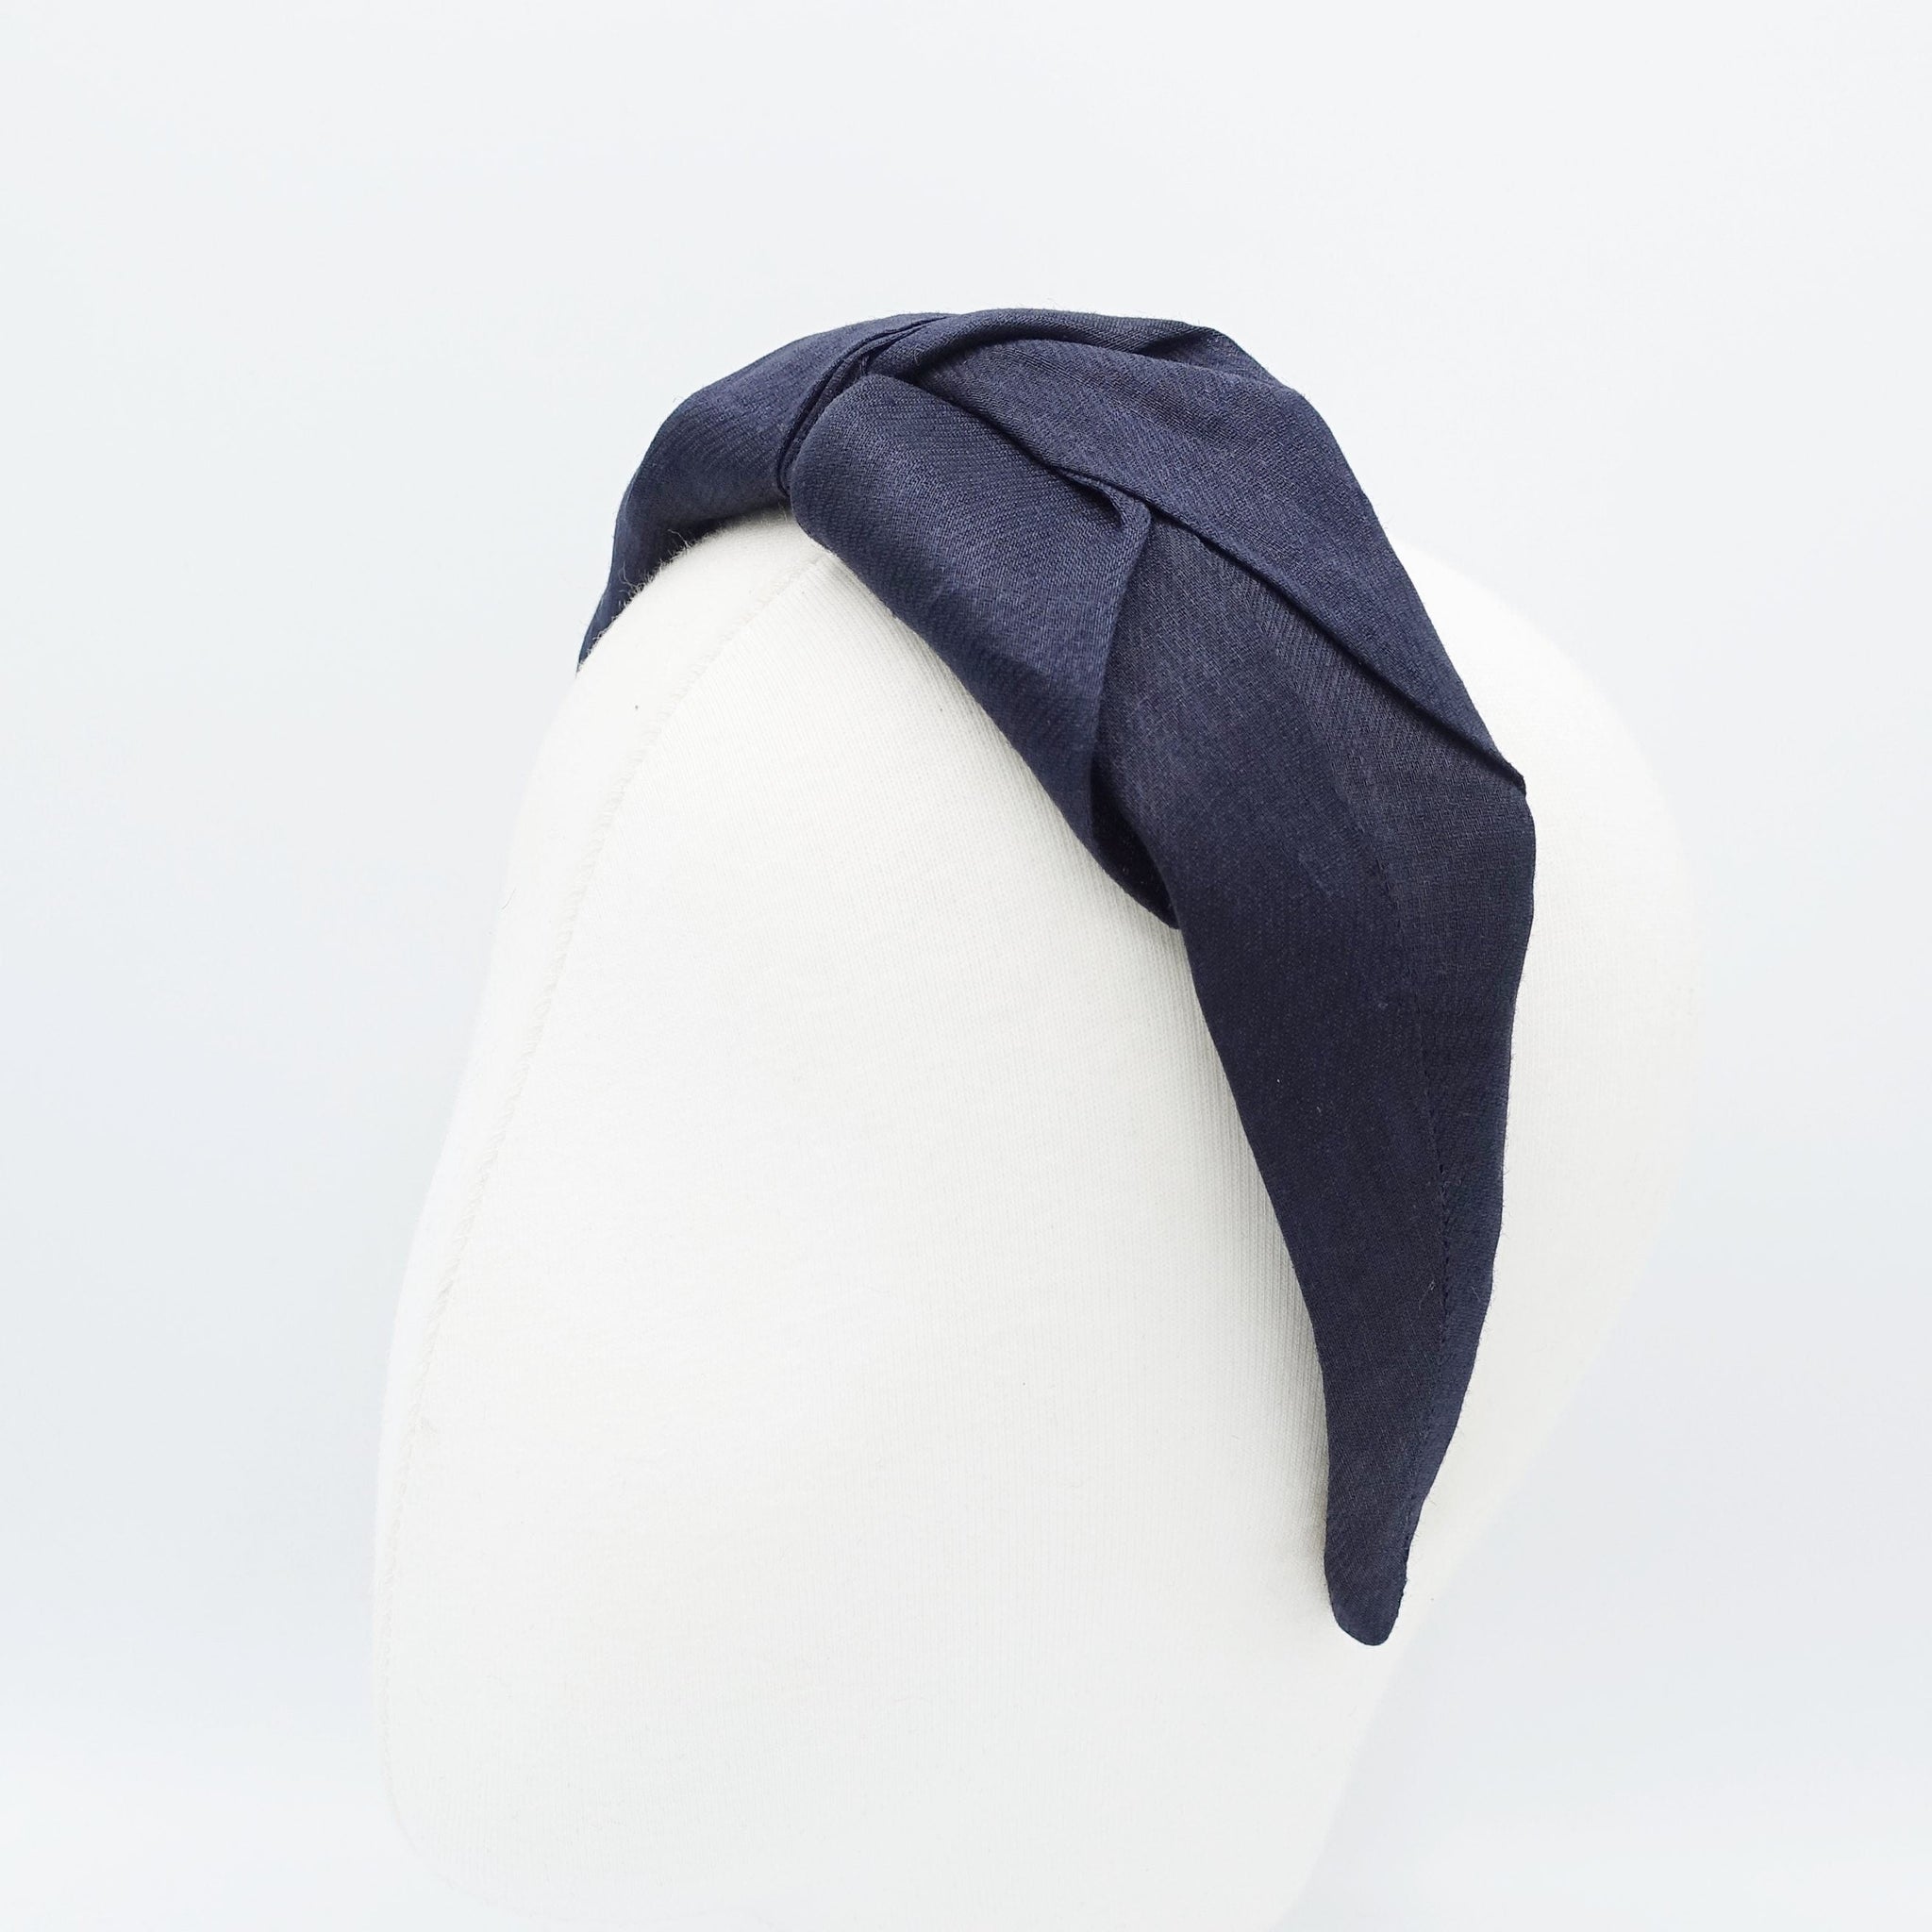 veryshine.com Headband Navy Linen blend headband front cross twist hairband solid hair accessory for women